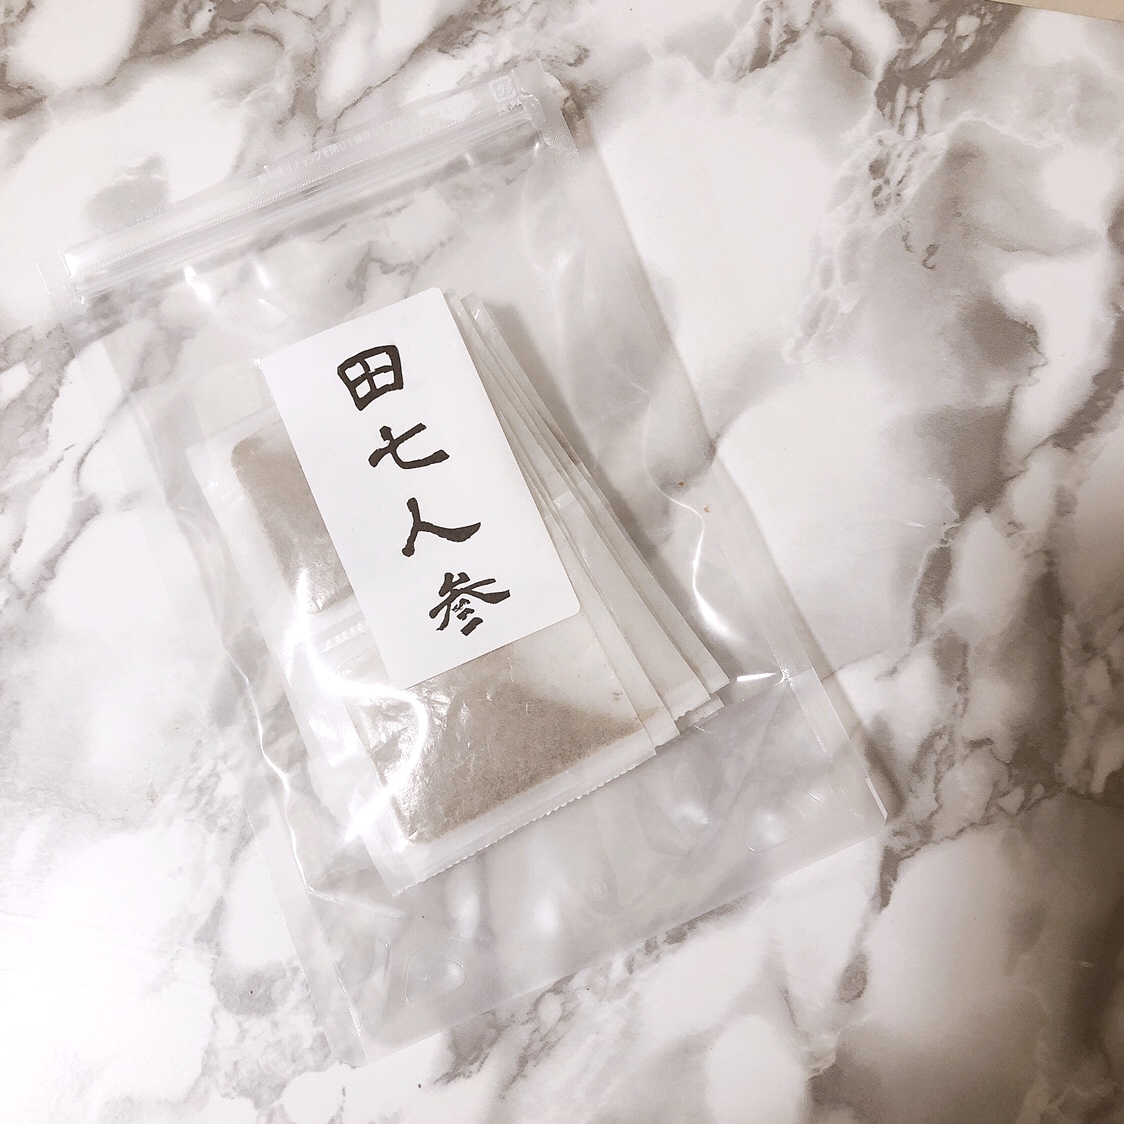 【Soup.+instagramers】_ayami.y_　冬の悩みを解消する、漢方や鍼治療。